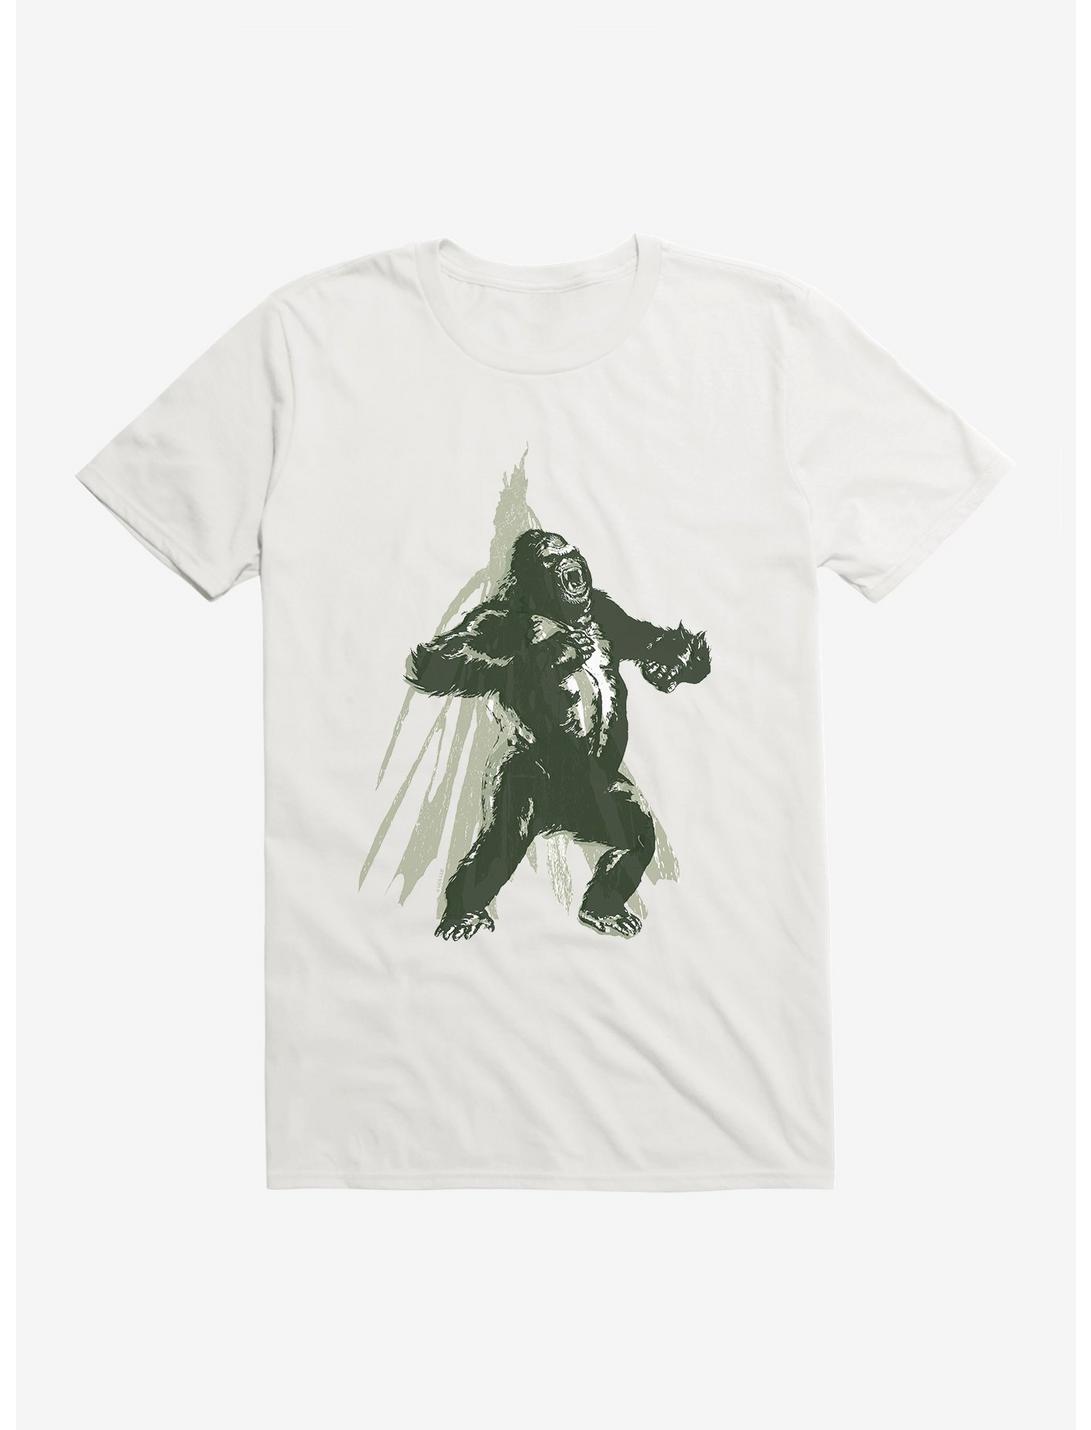 King Kong Battle Cry T-Shirt, , hi-res